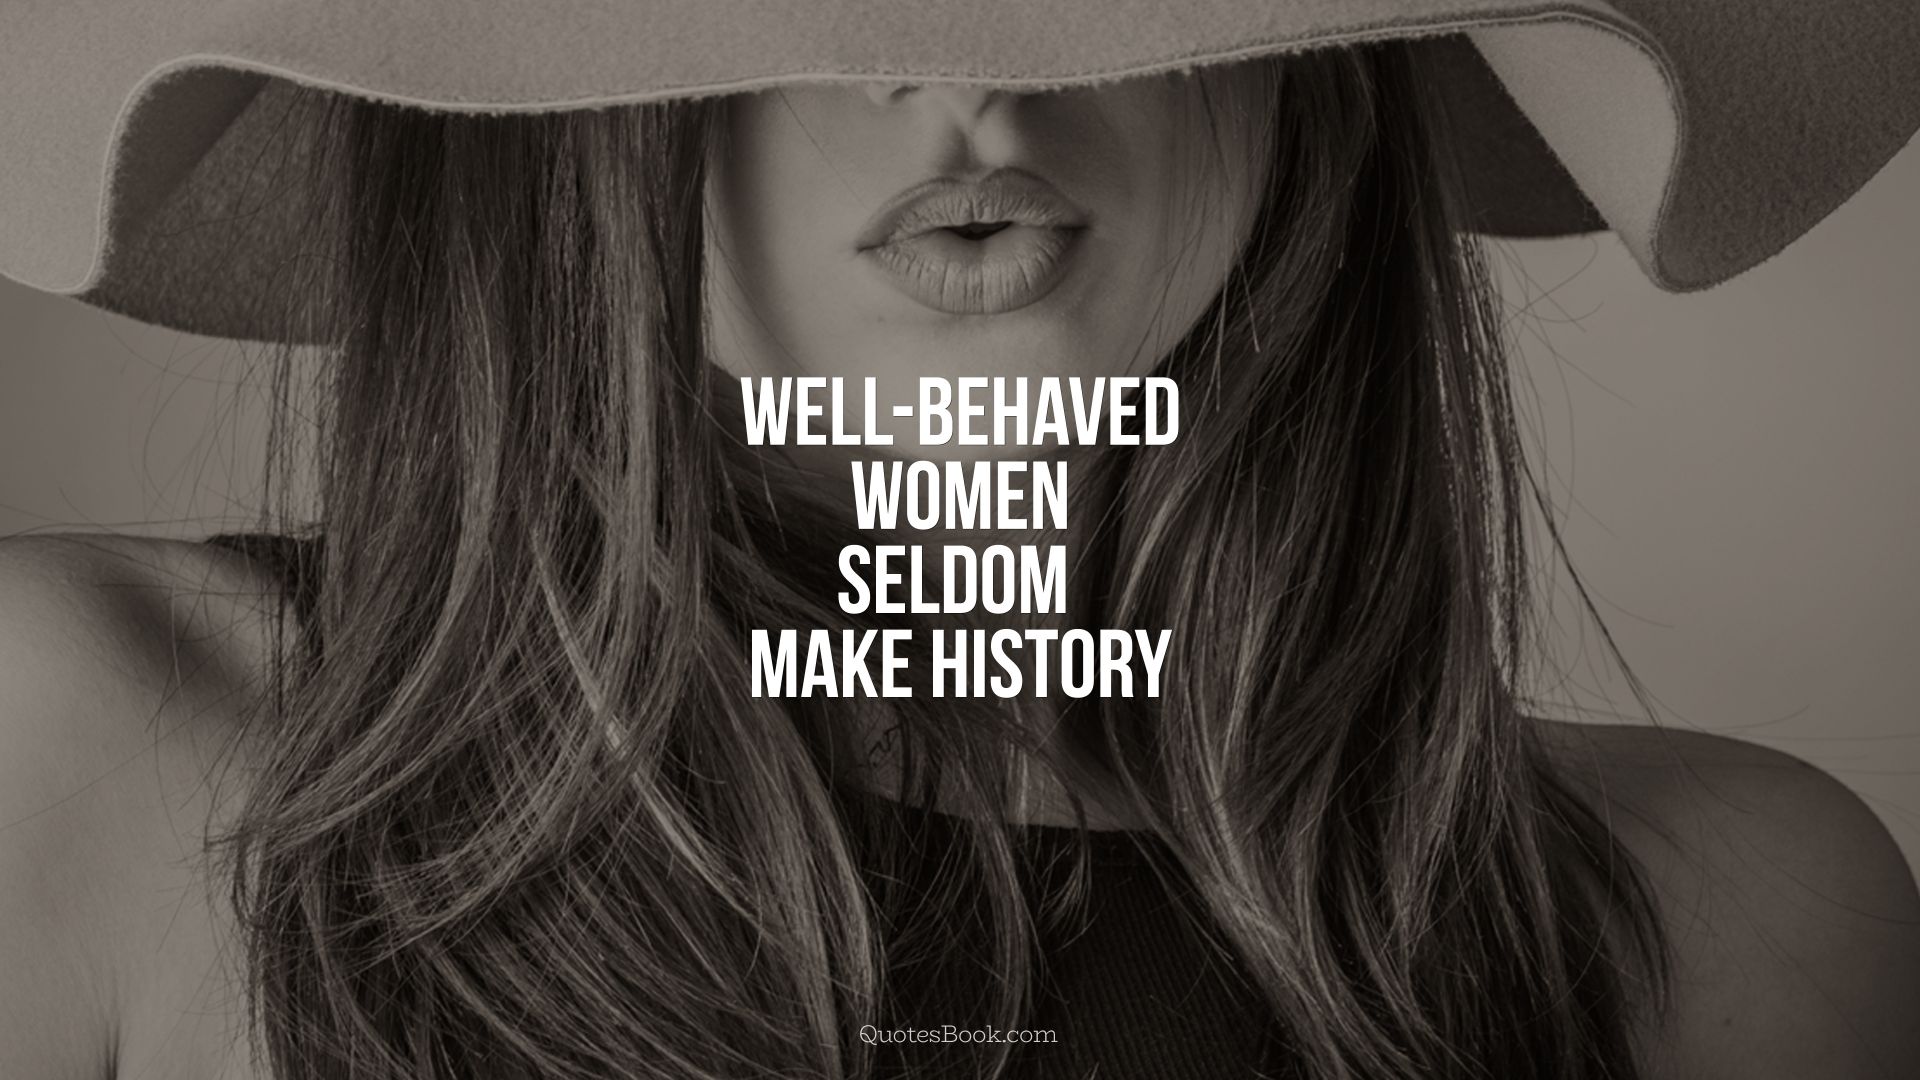 Well-behaved women seldom make history